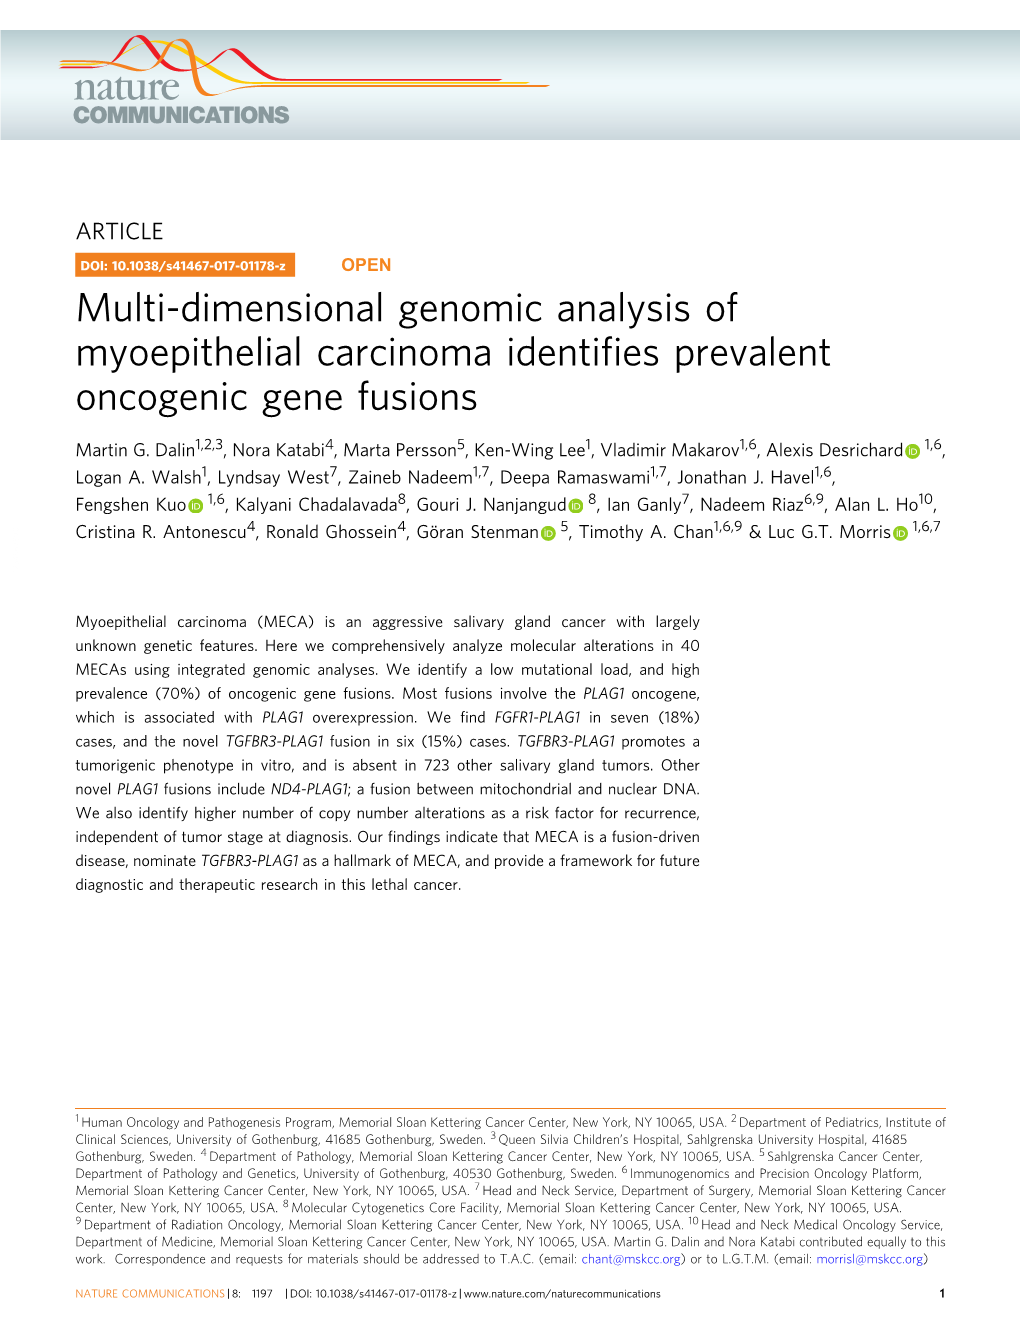 Multi-Dimensional Genomic Analysis of Myoepithelial Carcinoma Identifies Prevalent Oncogenic Gene Fusions